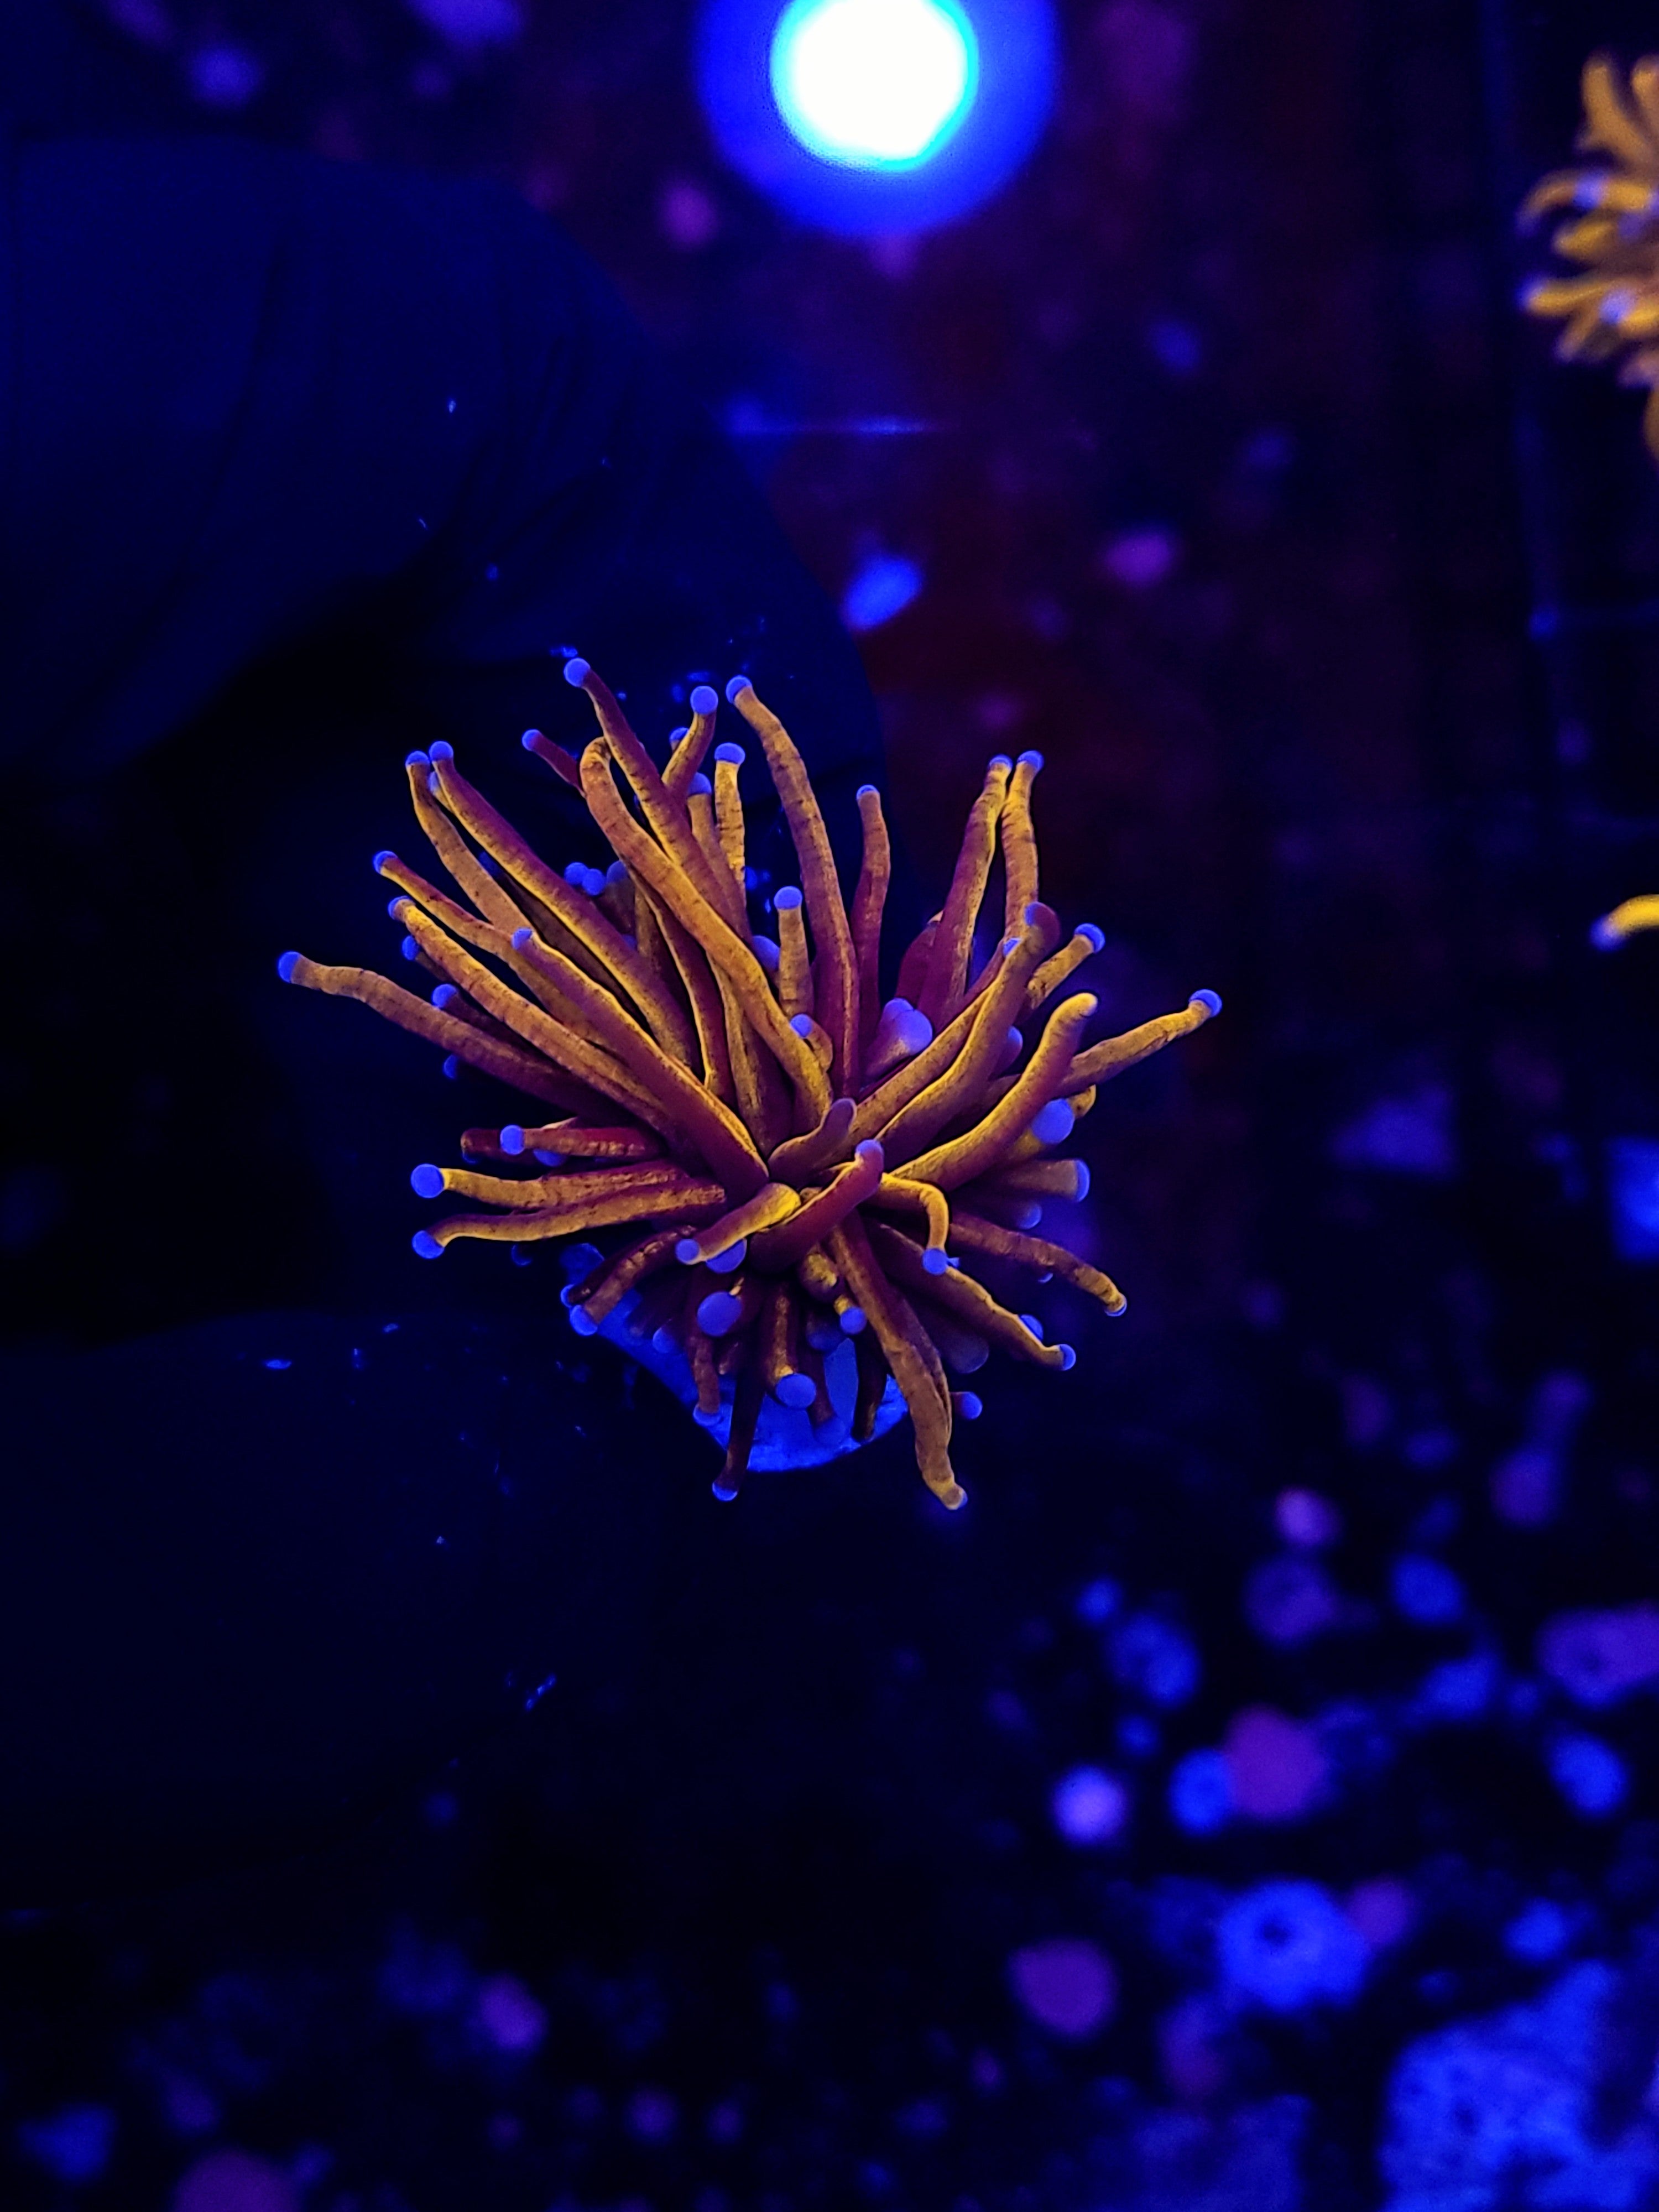 NY KNICKS TORCH - Black Label Corals